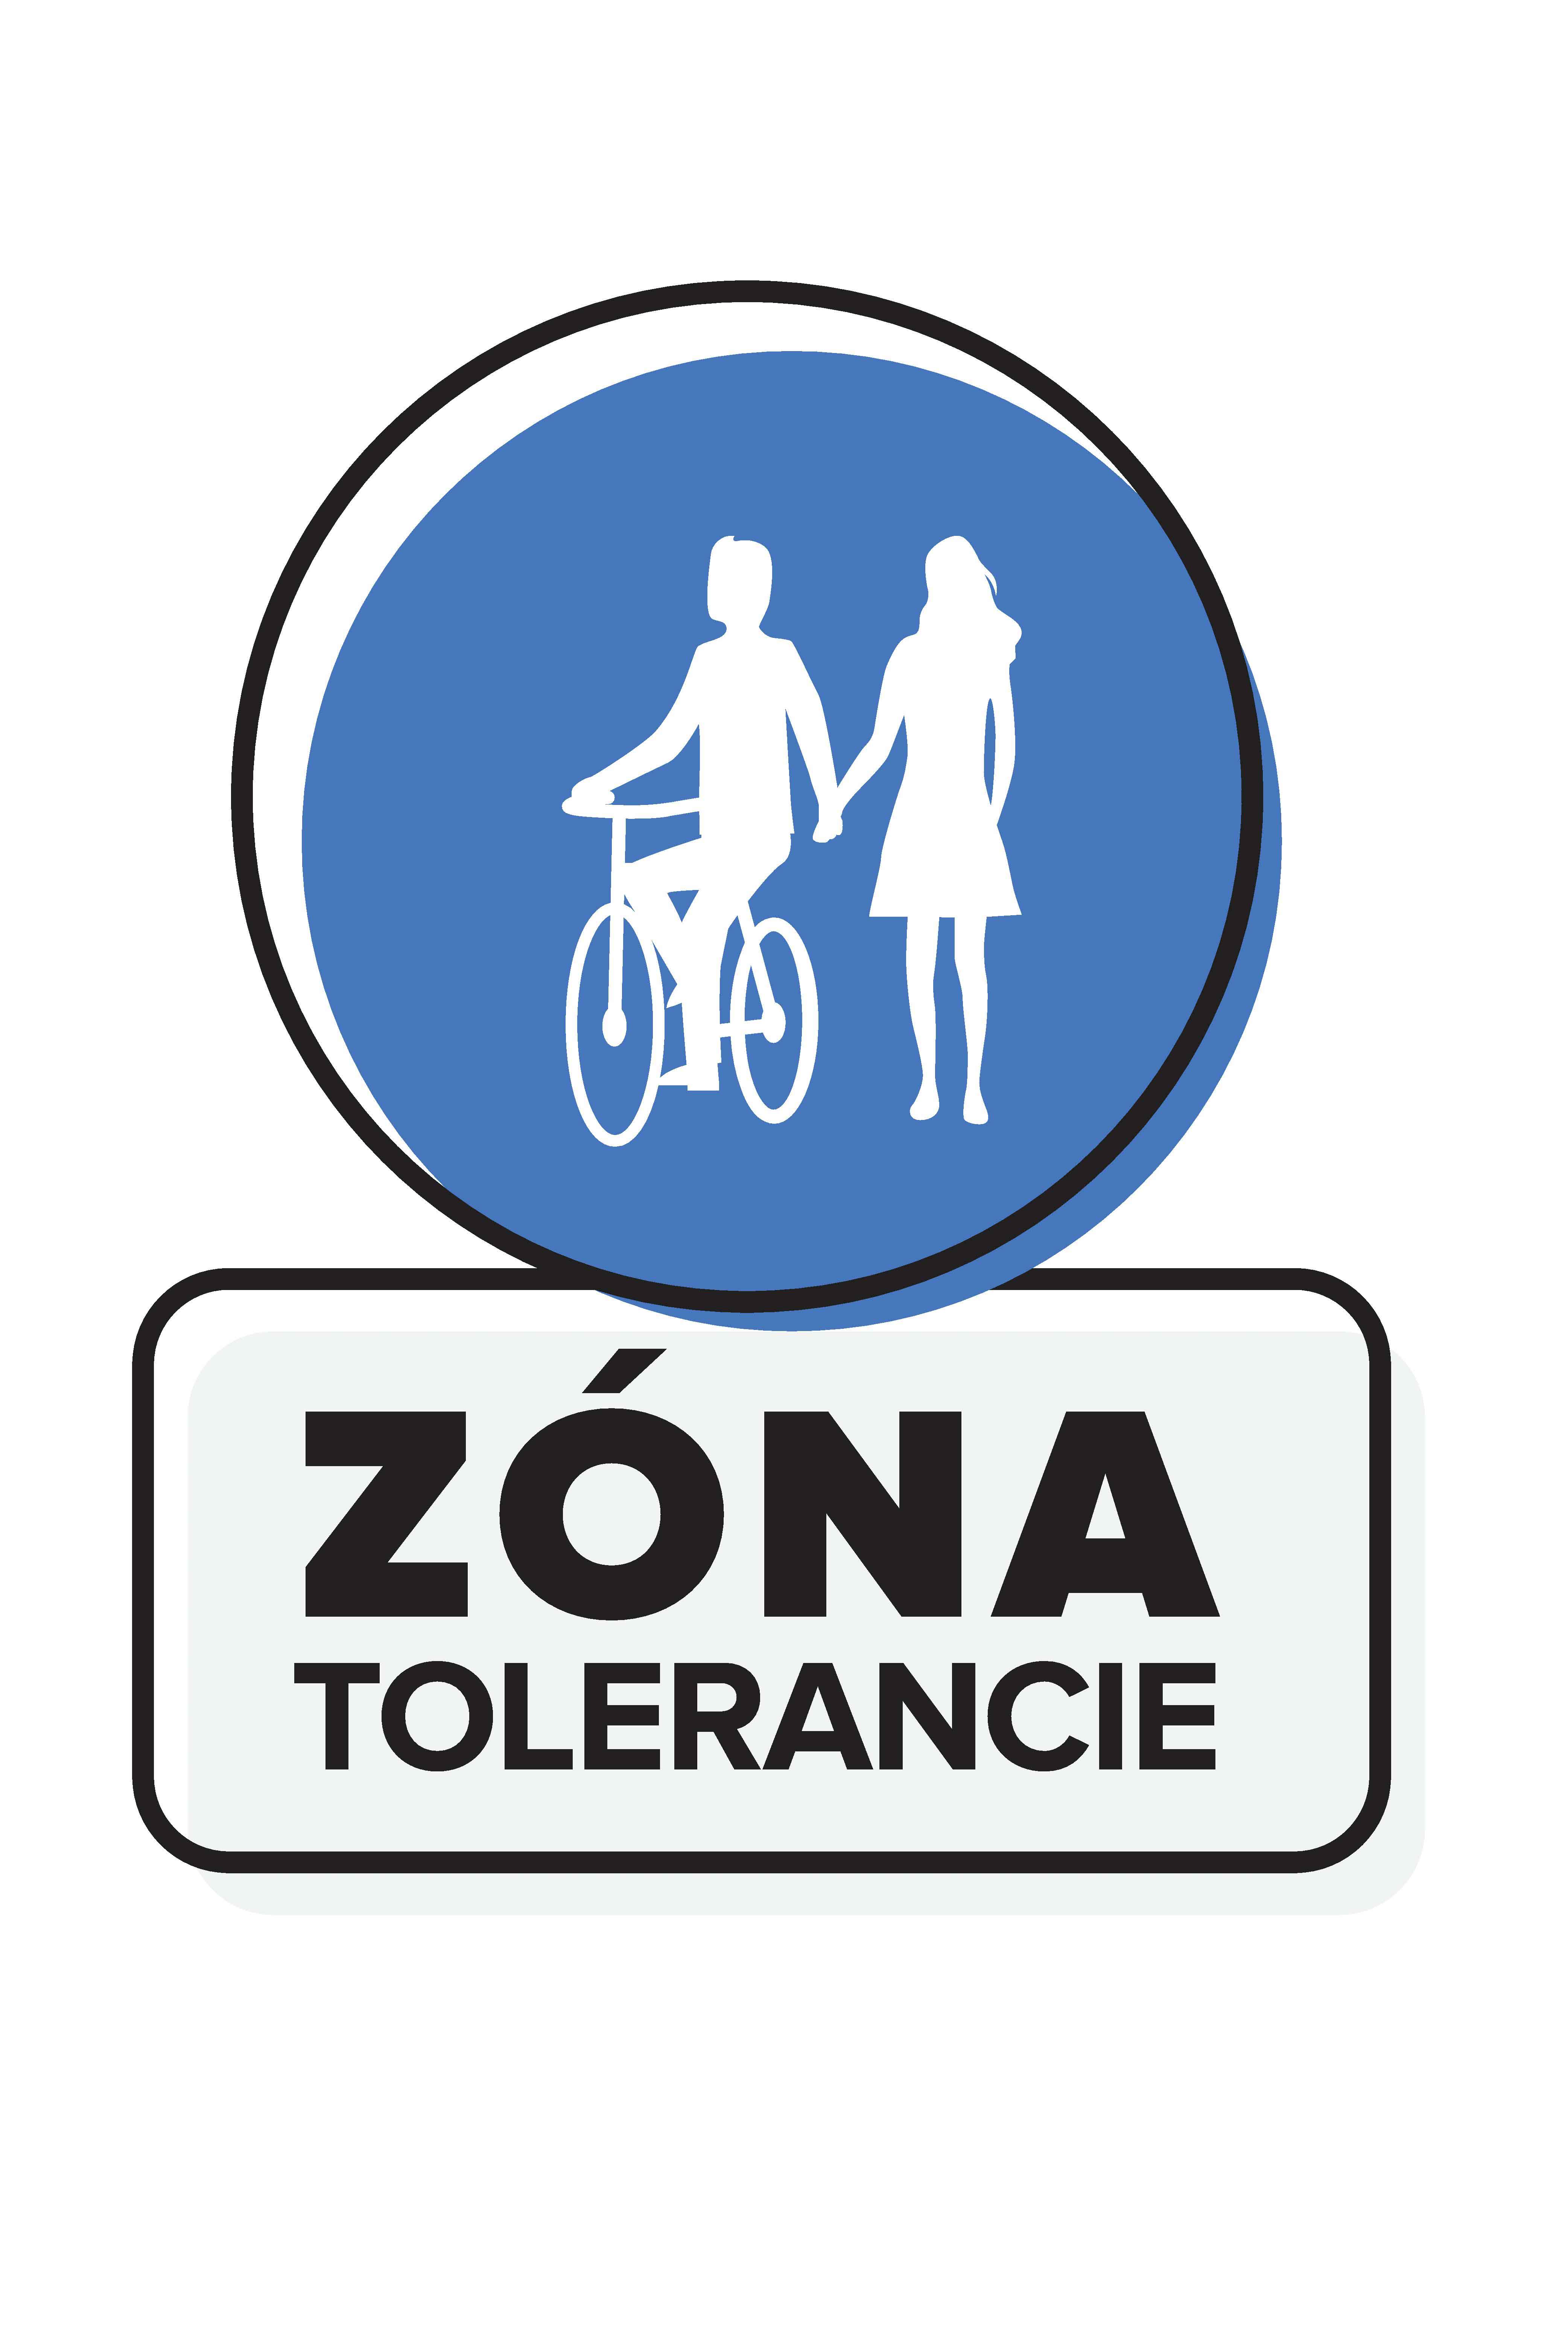 zona tolerancie logo